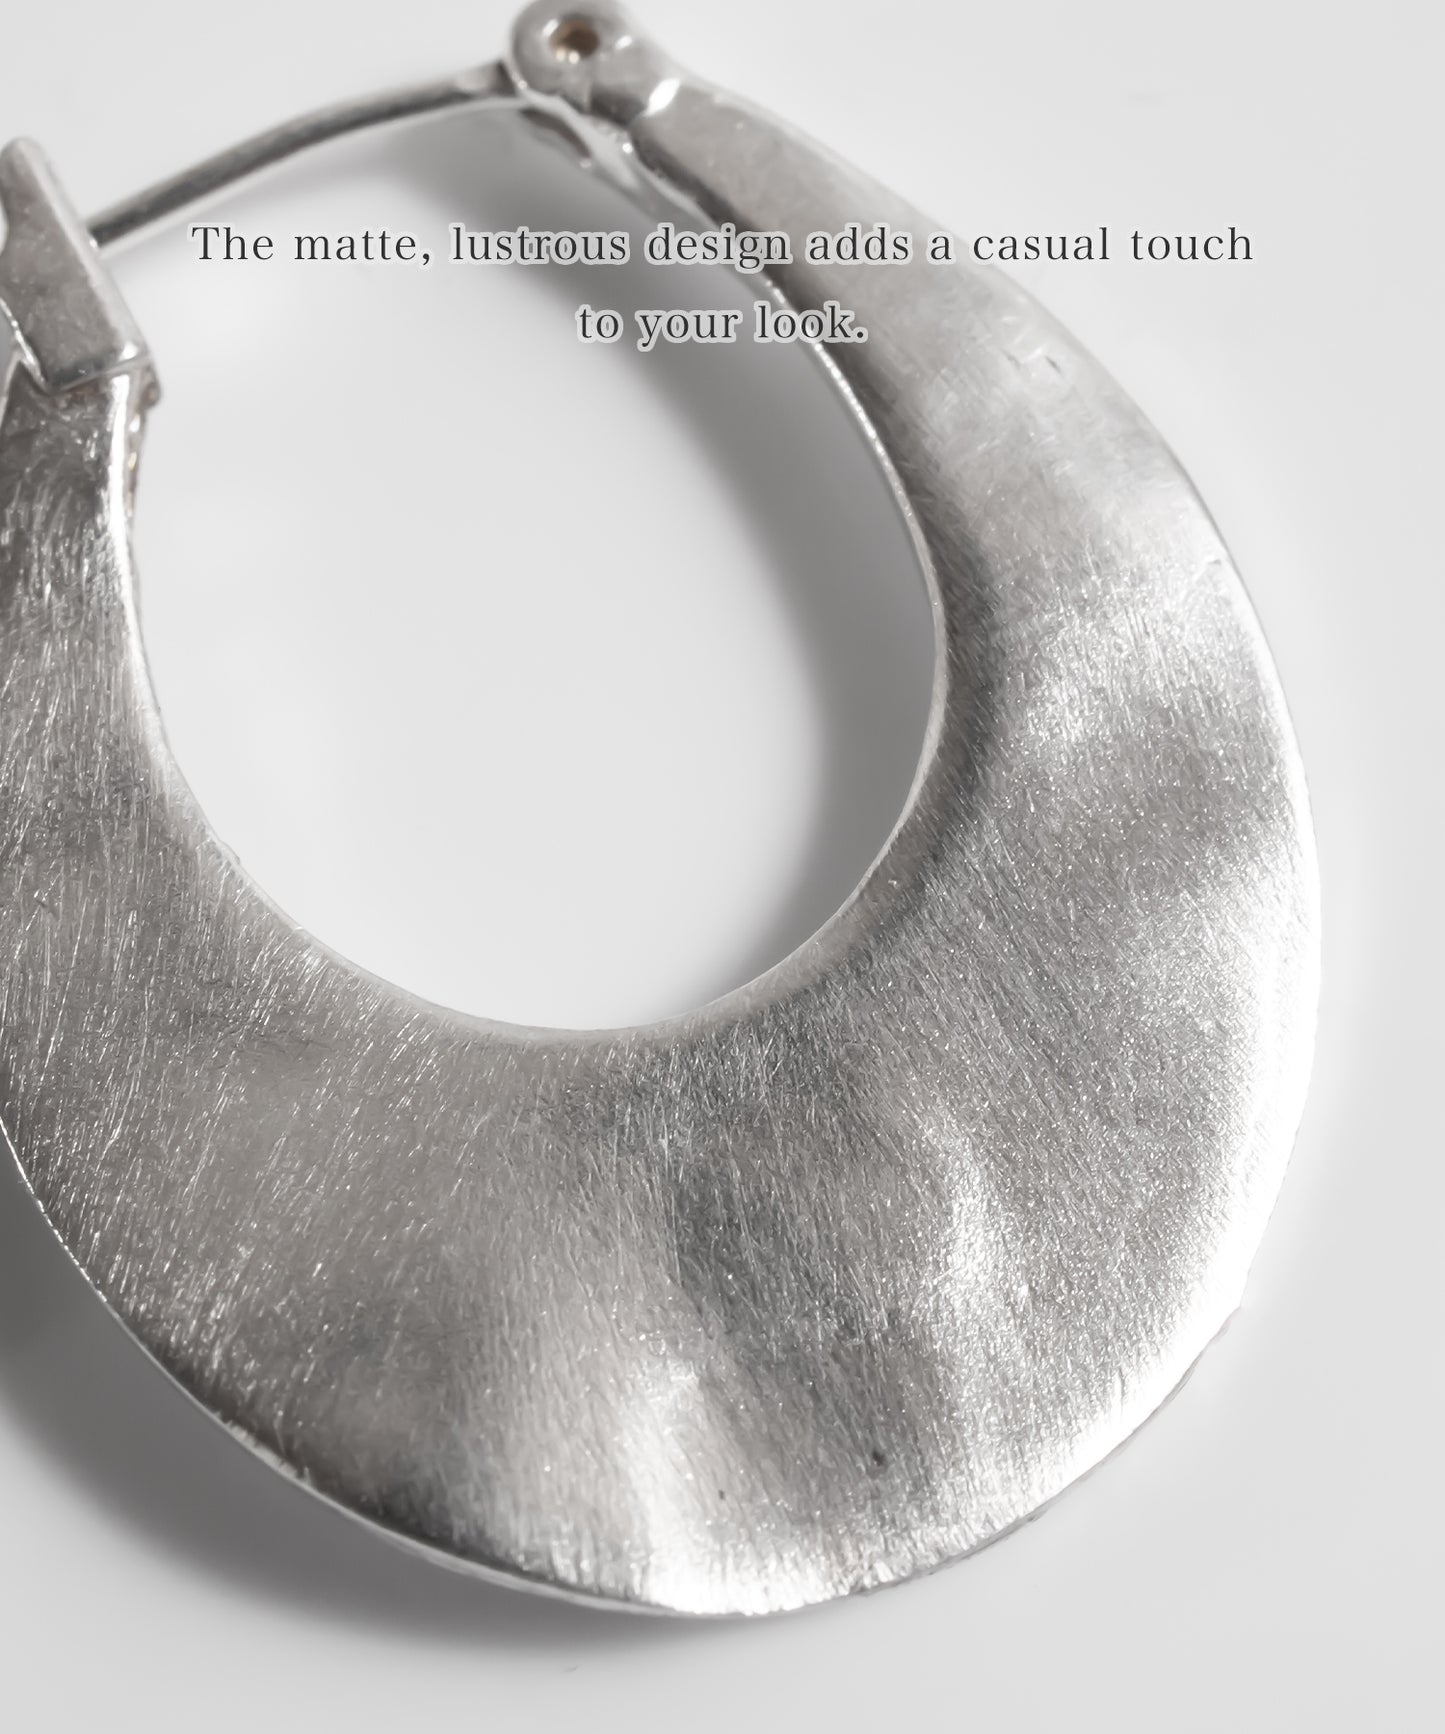 Silver925 Horse Shoe Hoop Earrings | PEDOL